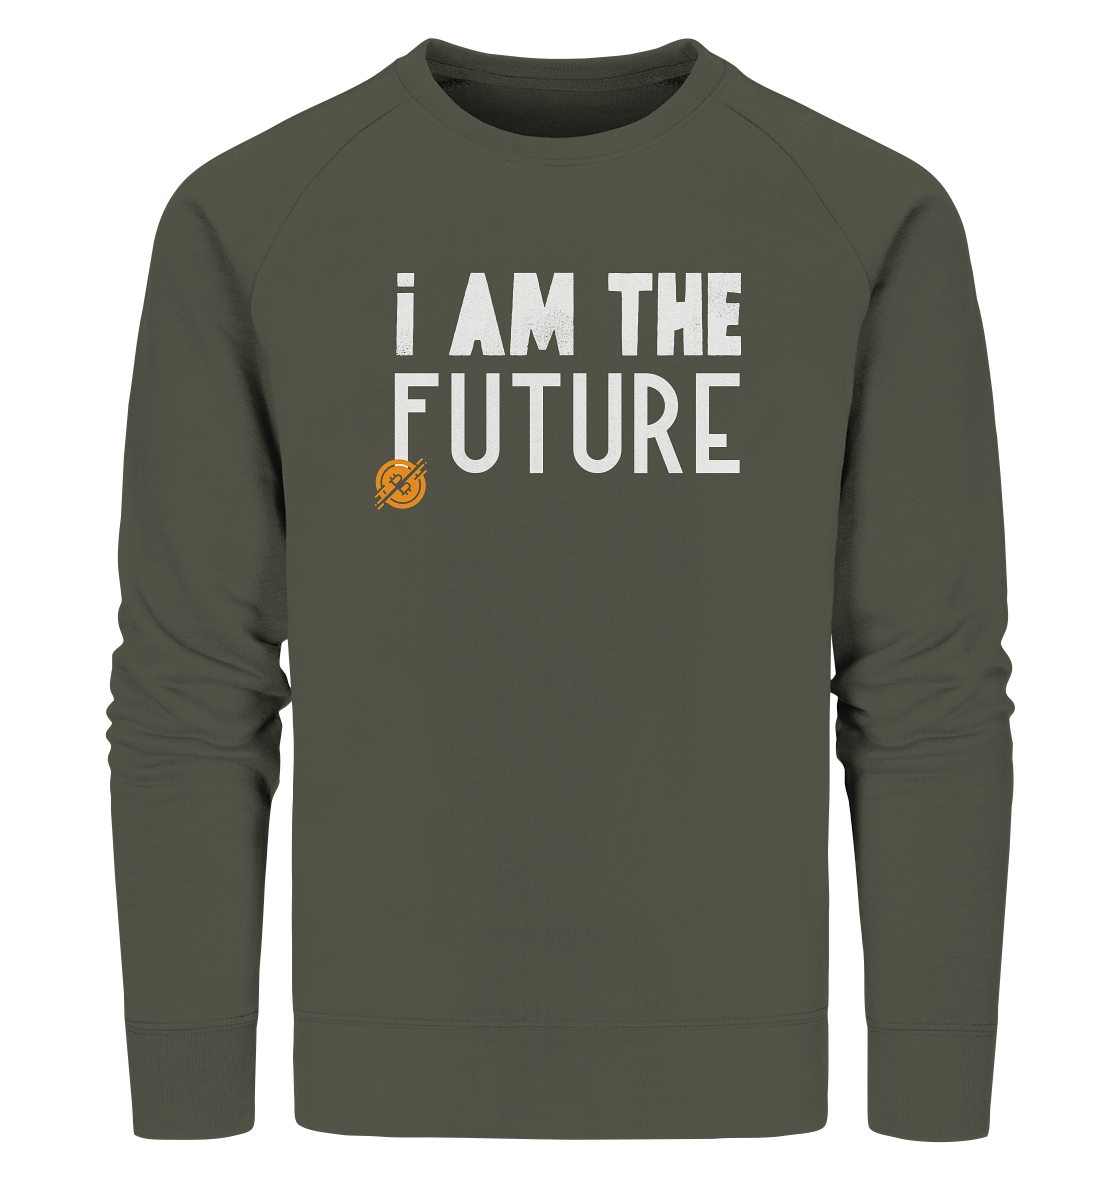 Bitcoin Sweatshirt "I am the future" - Organic Sweatshirt